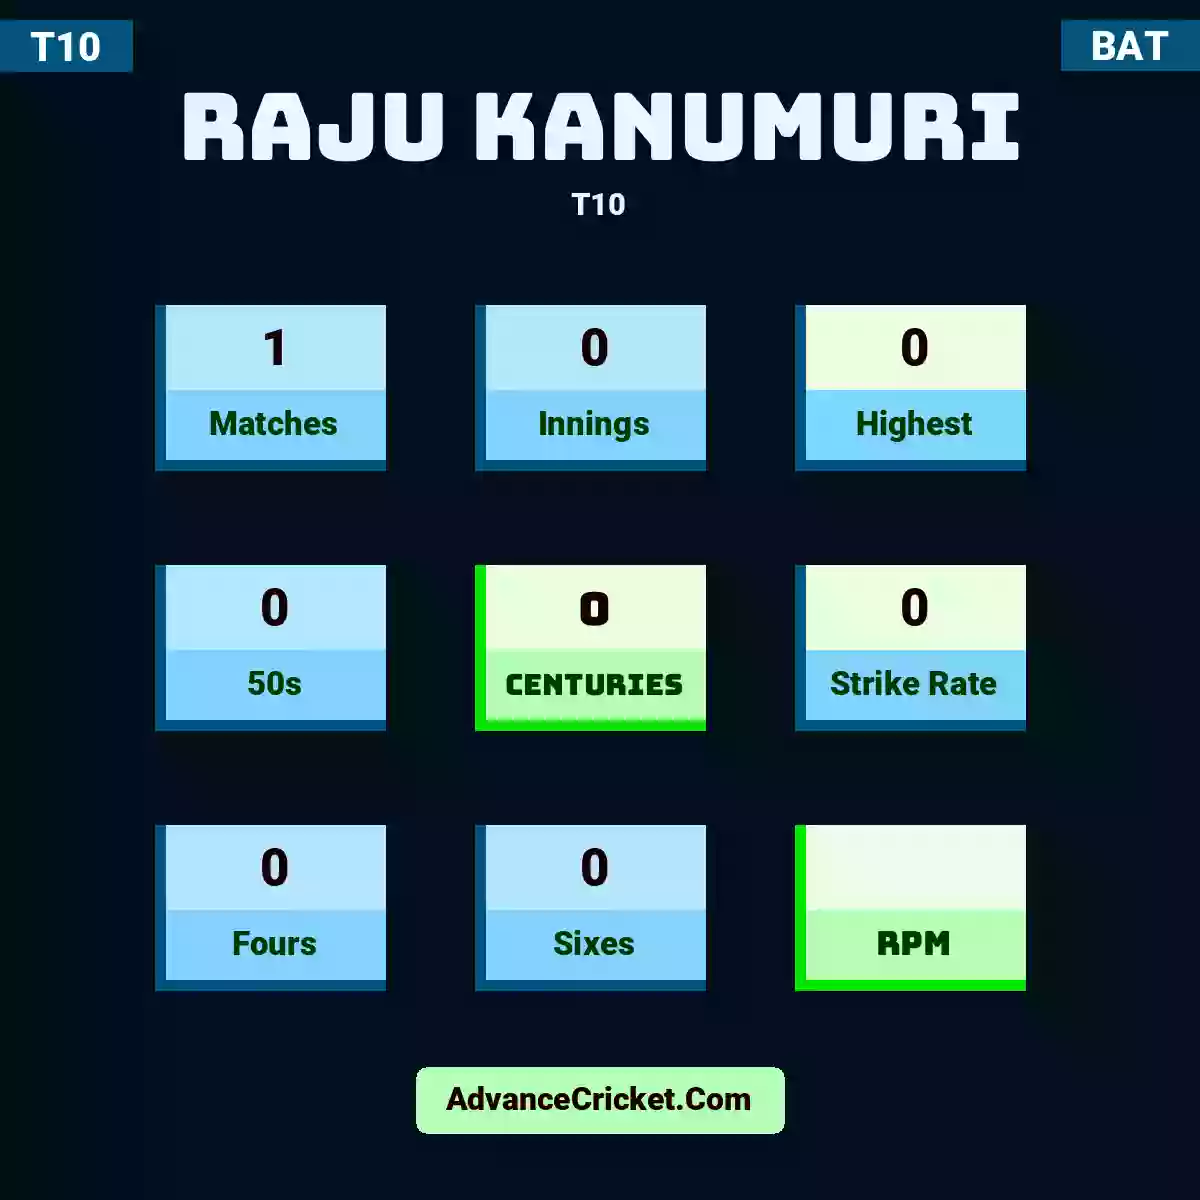 Raju Kanumuri T10 , Raju Kanumuri played 1 matches, scored 0 runs as highest, 0 half-centuries, and 0 centuries, with a strike rate of 0. R.Kanumuri hit 0 fours and 0 sixes.